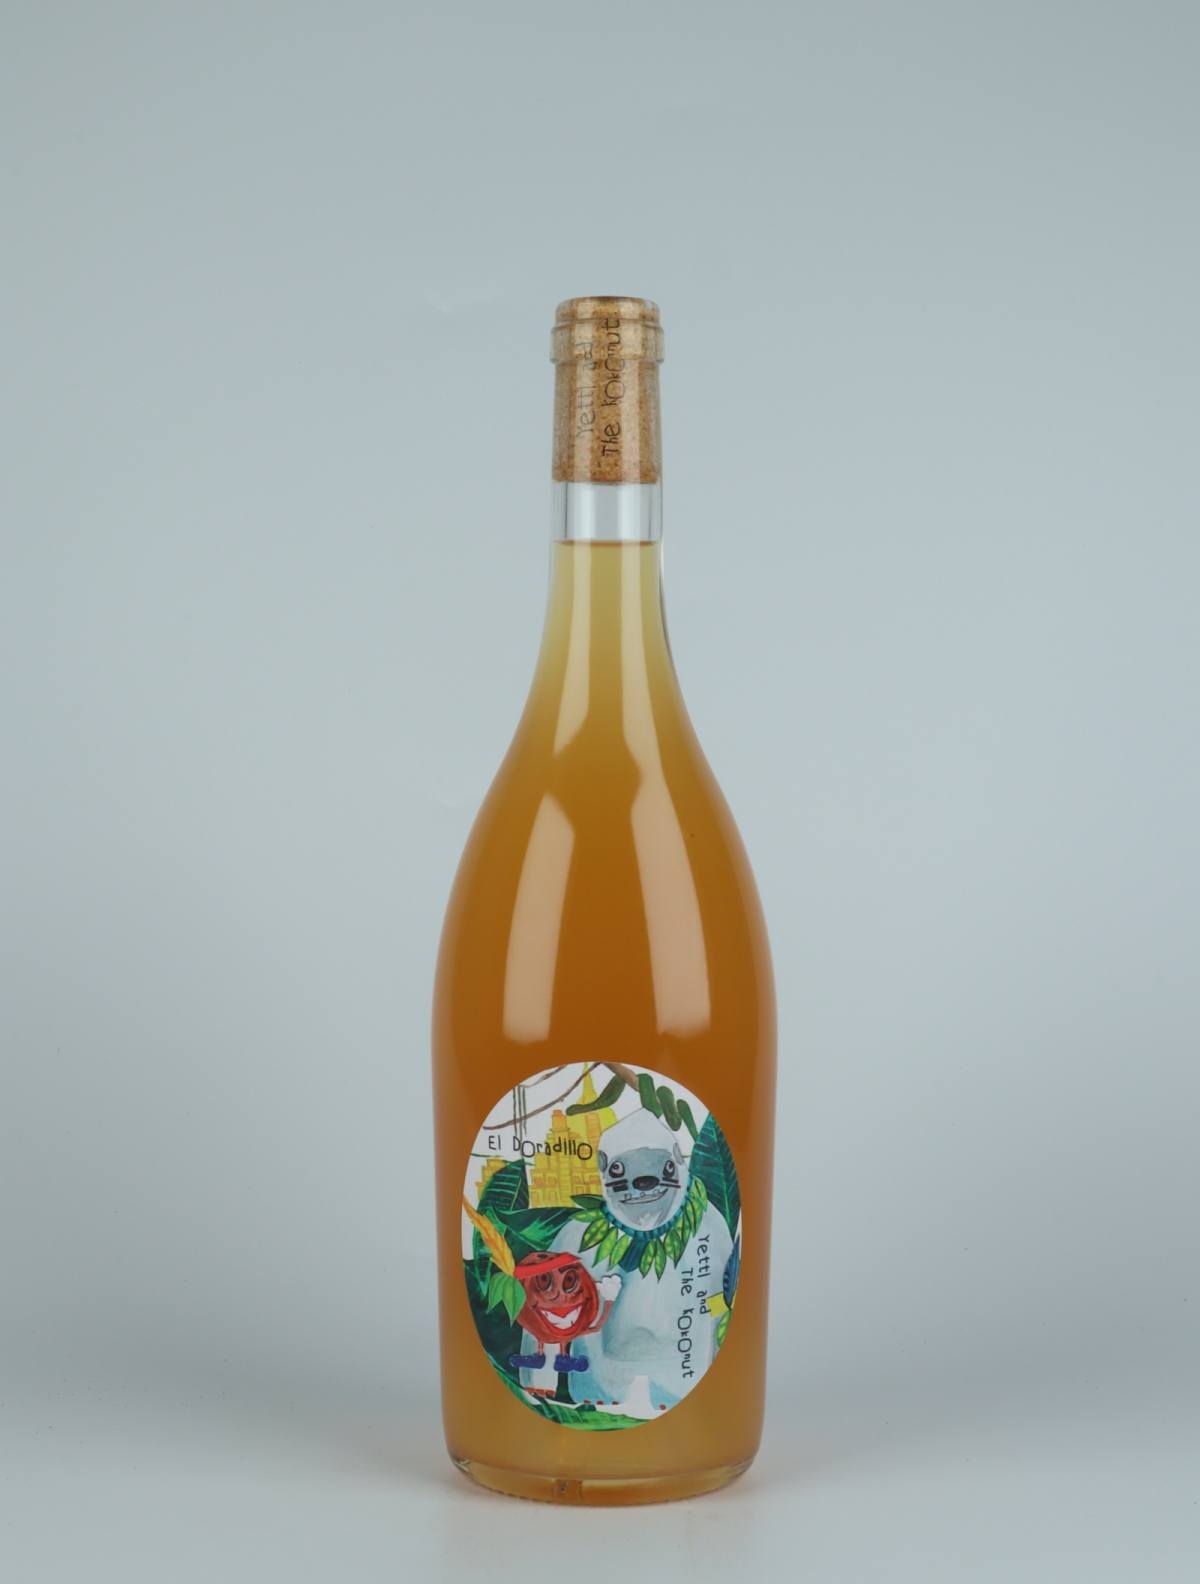 A bottle 2021 El Doradillo Orange wine from Yetti and the Kokonut, Adelaide Hills in Australia